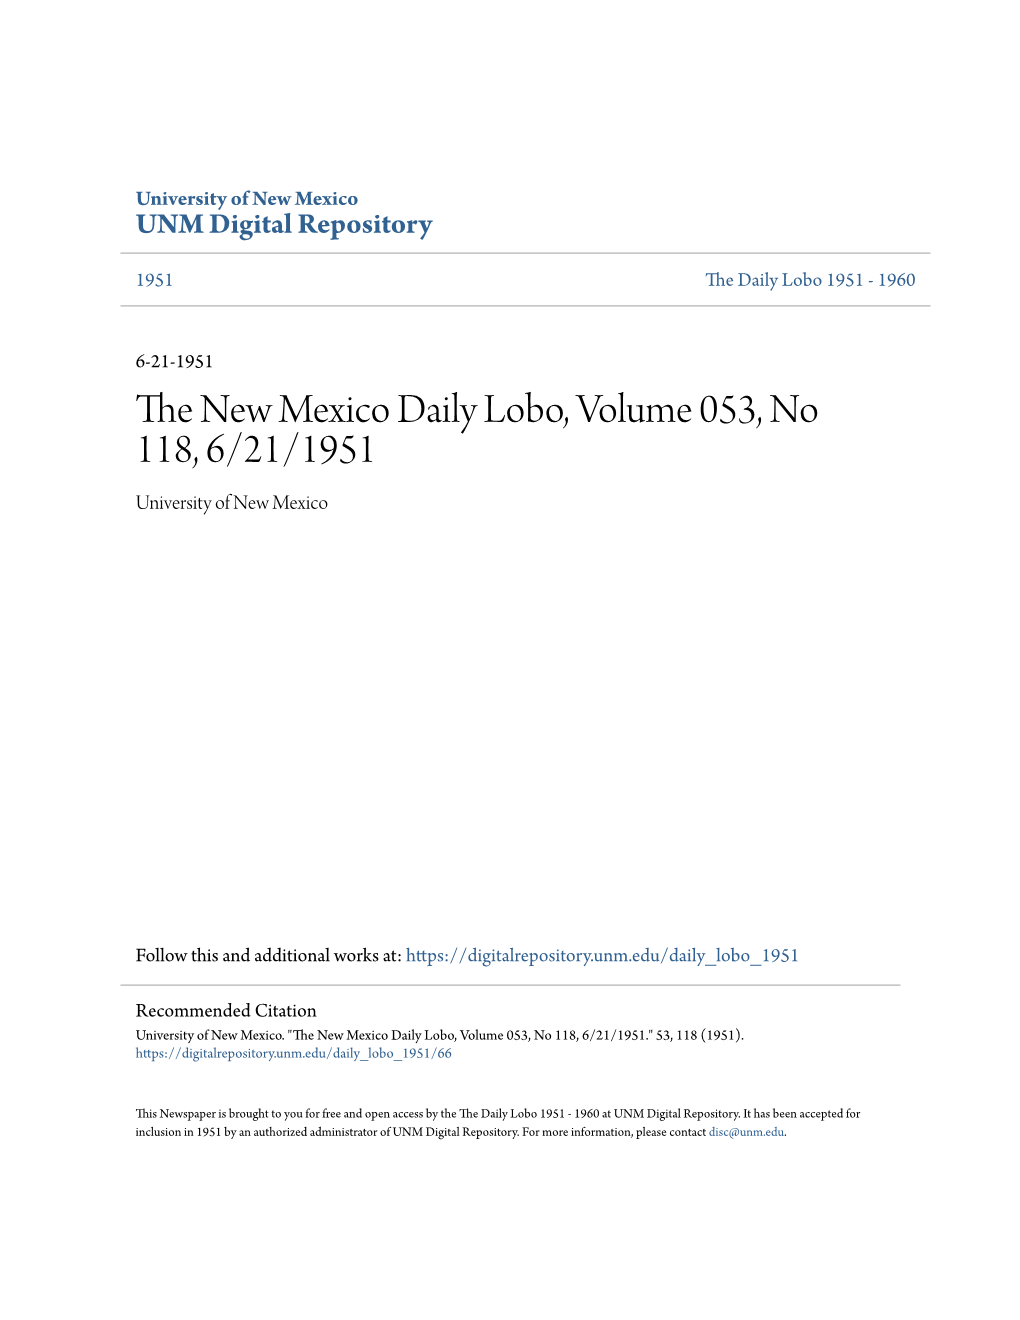 The New Mexico Daily Lobo, Volume 053, No 118, 6/21/1951